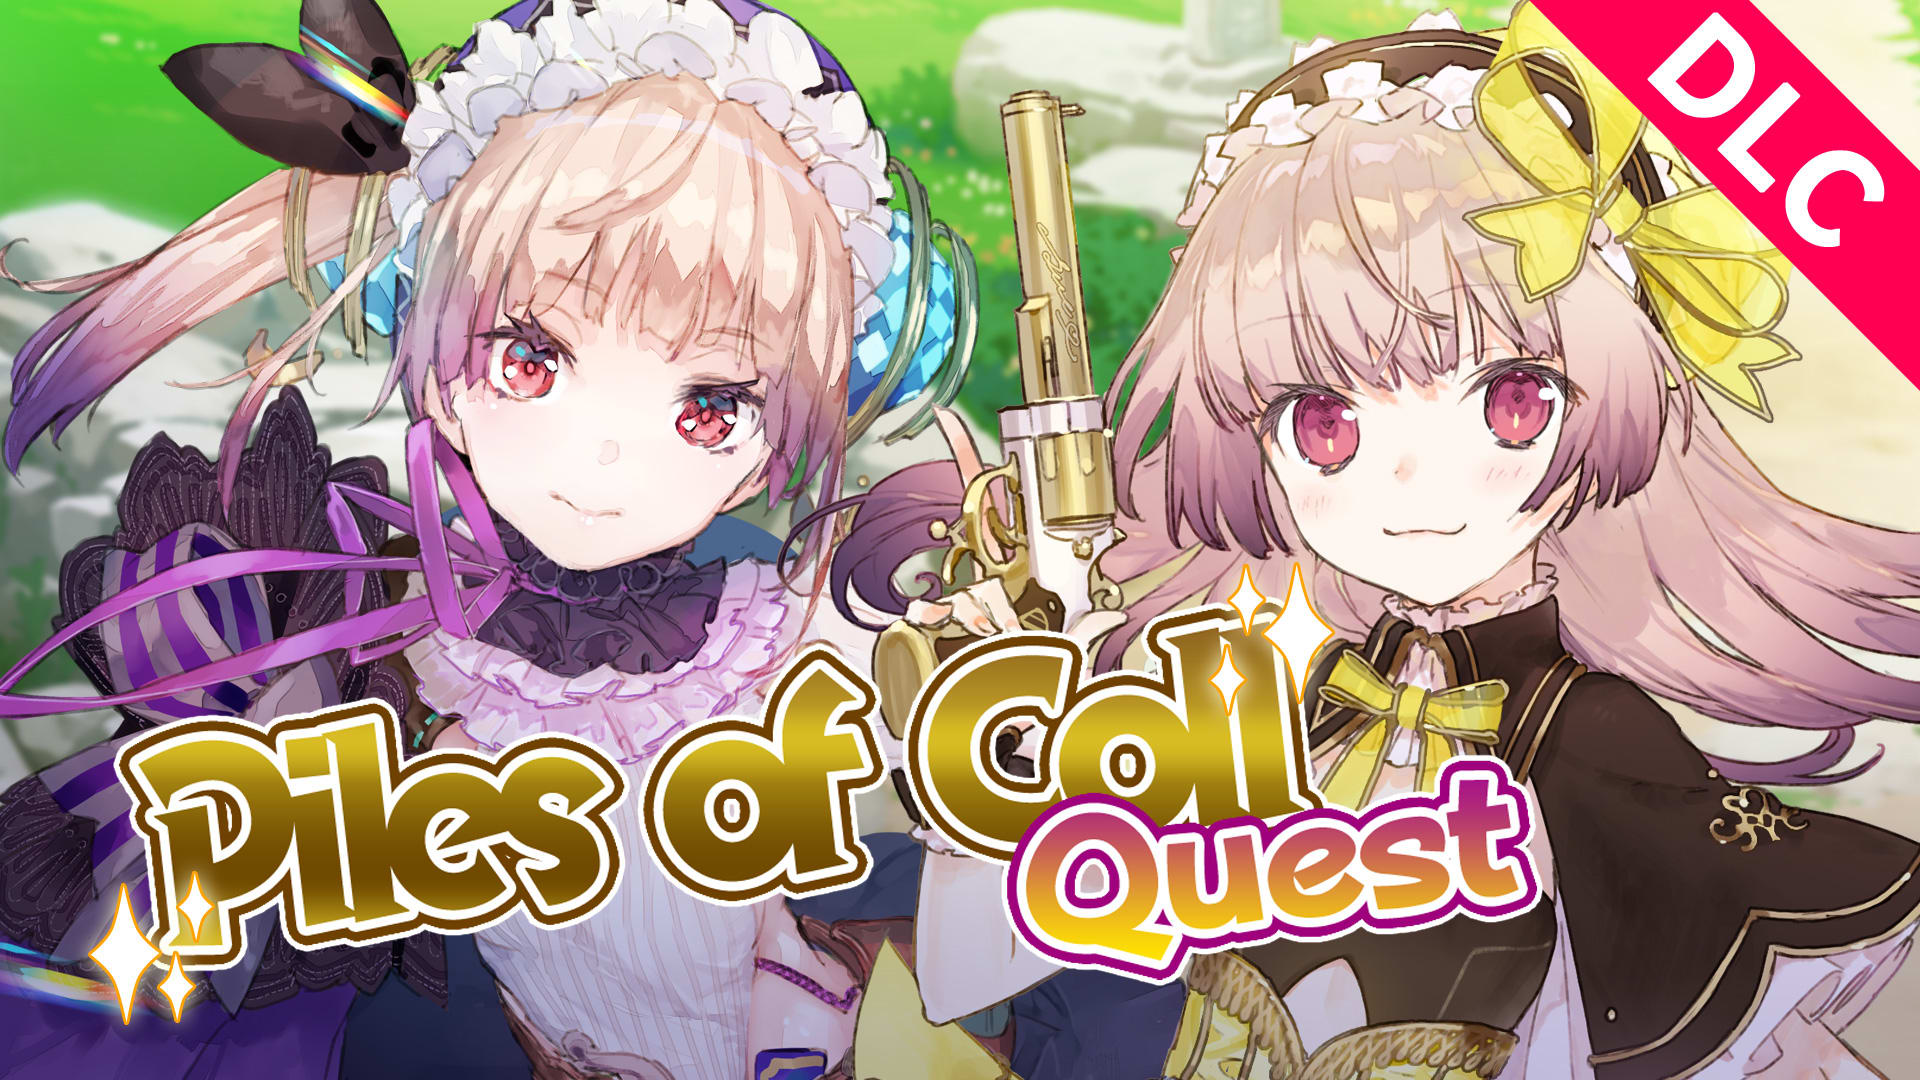 Atelier Lydie & Suelle: New Quest "Piles of Coll Quest"